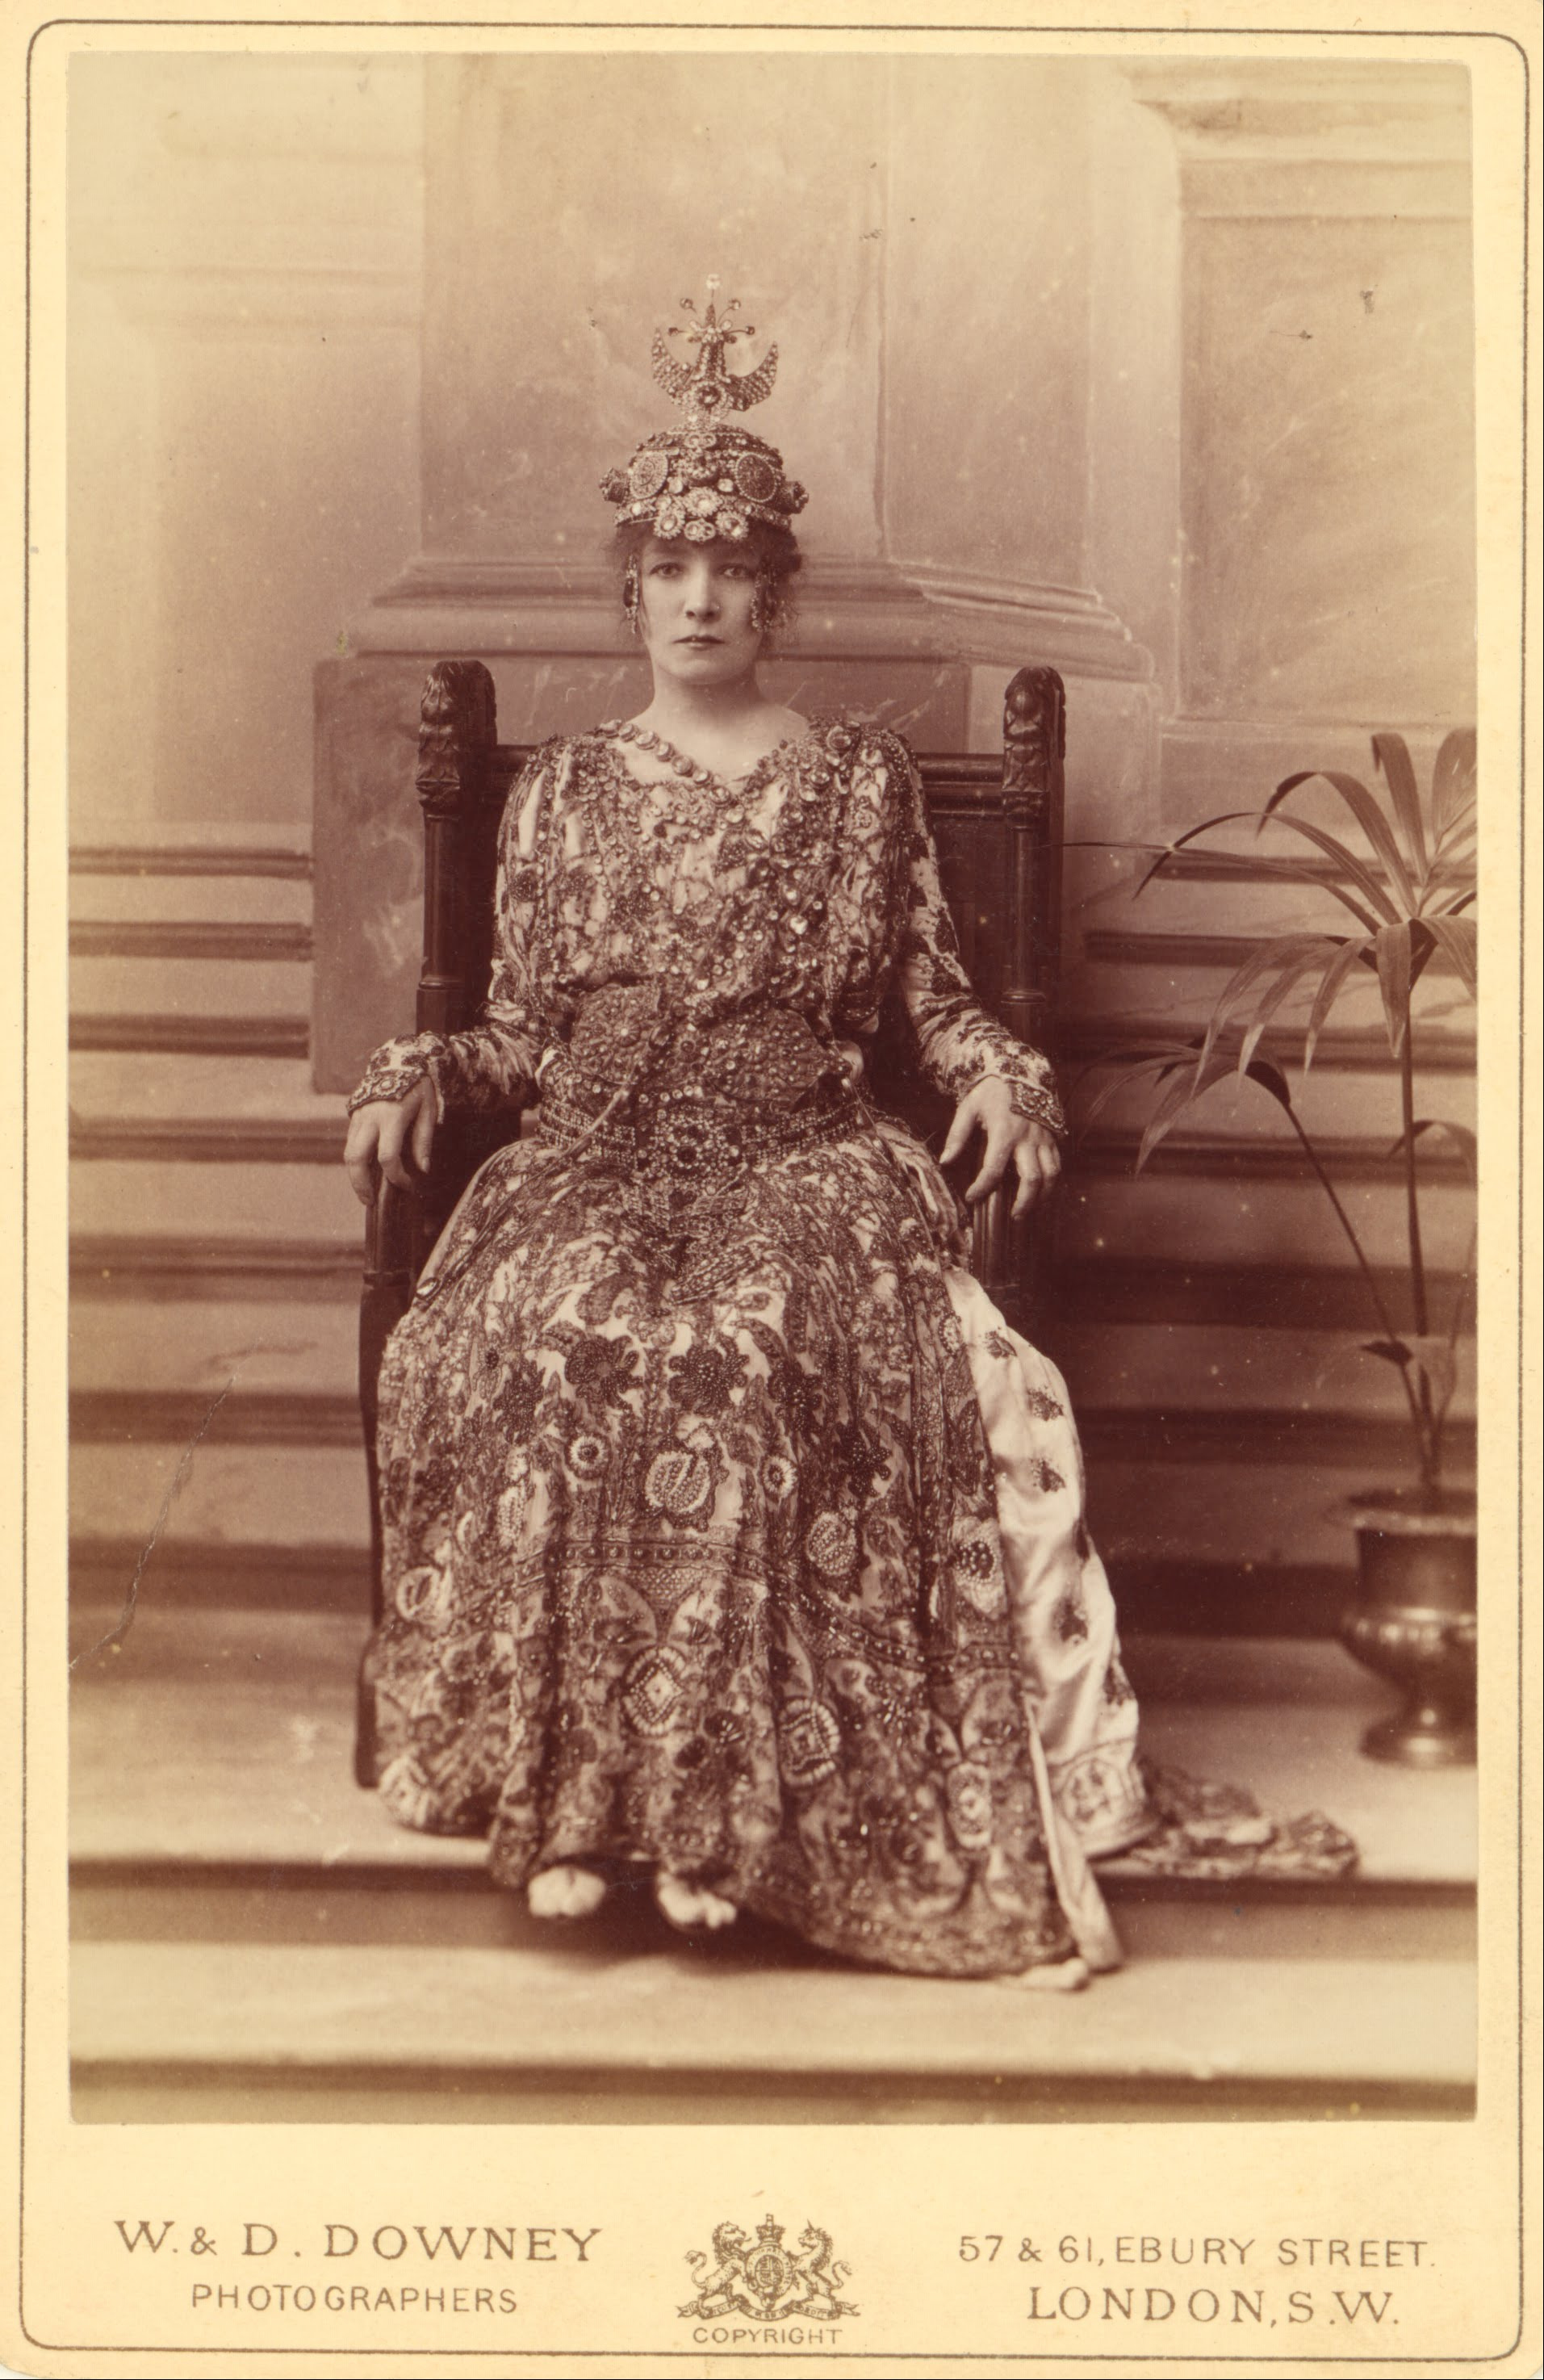 W. & D. Downey (British, active 1867 - 1908) - (Sarah Bernhardt as the Empress Theodora in Sardou's 